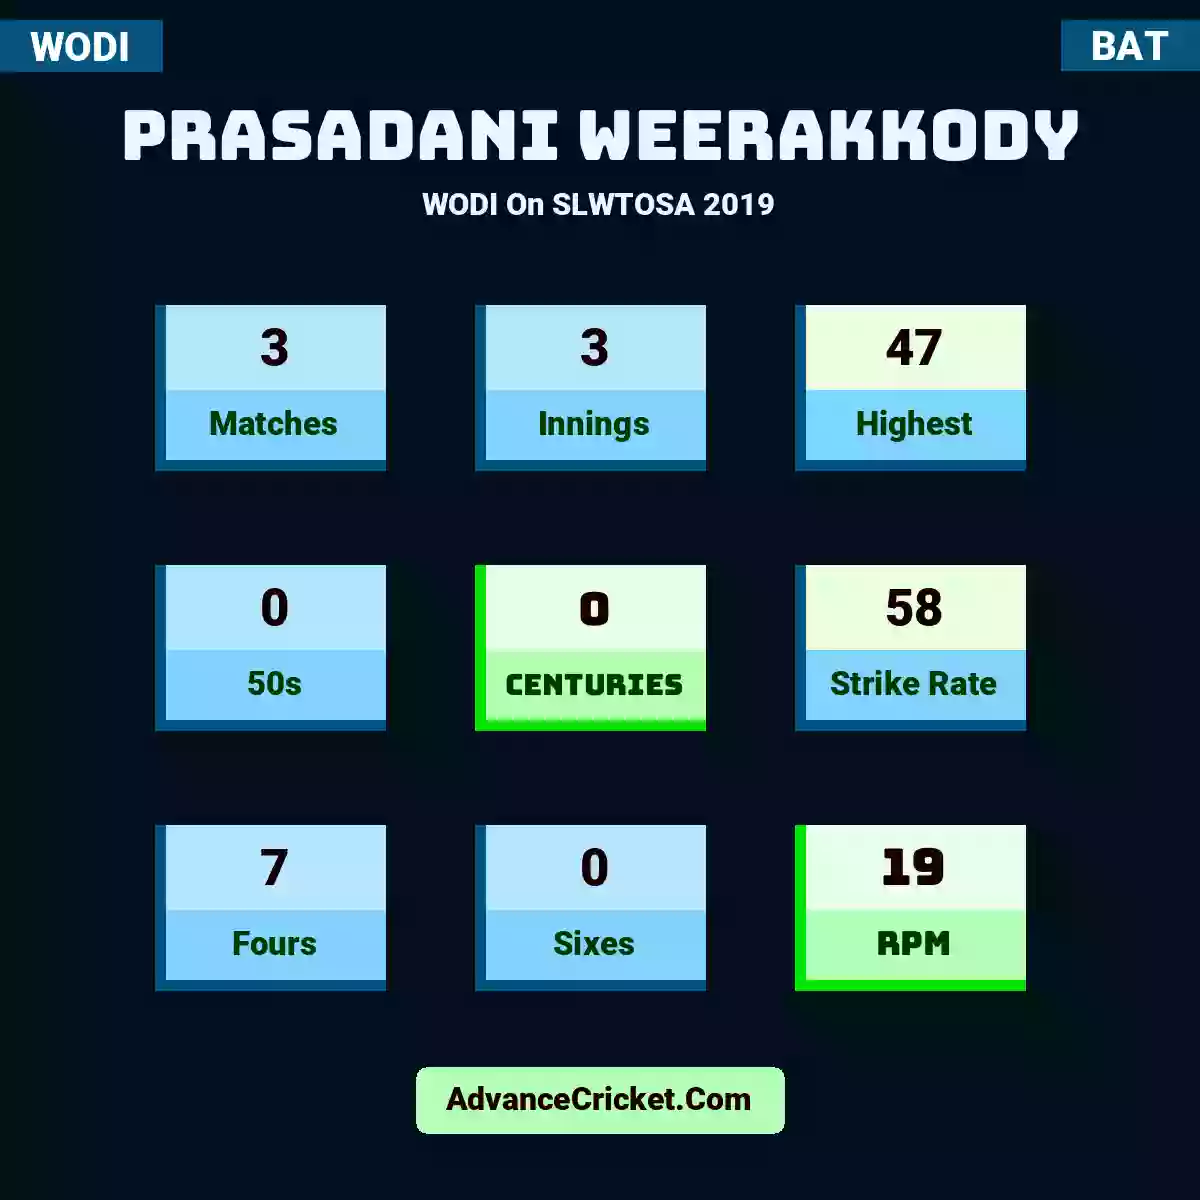 Prasadani Weerakkody WODI  On SLWTOSA 2019, Prasadani Weerakkody played 3 matches, scored 47 runs as highest, 0 half-centuries, and 0 centuries, with a strike rate of 58. P.Weerakkody hit 7 fours and 0 sixes, with an RPM of 19.